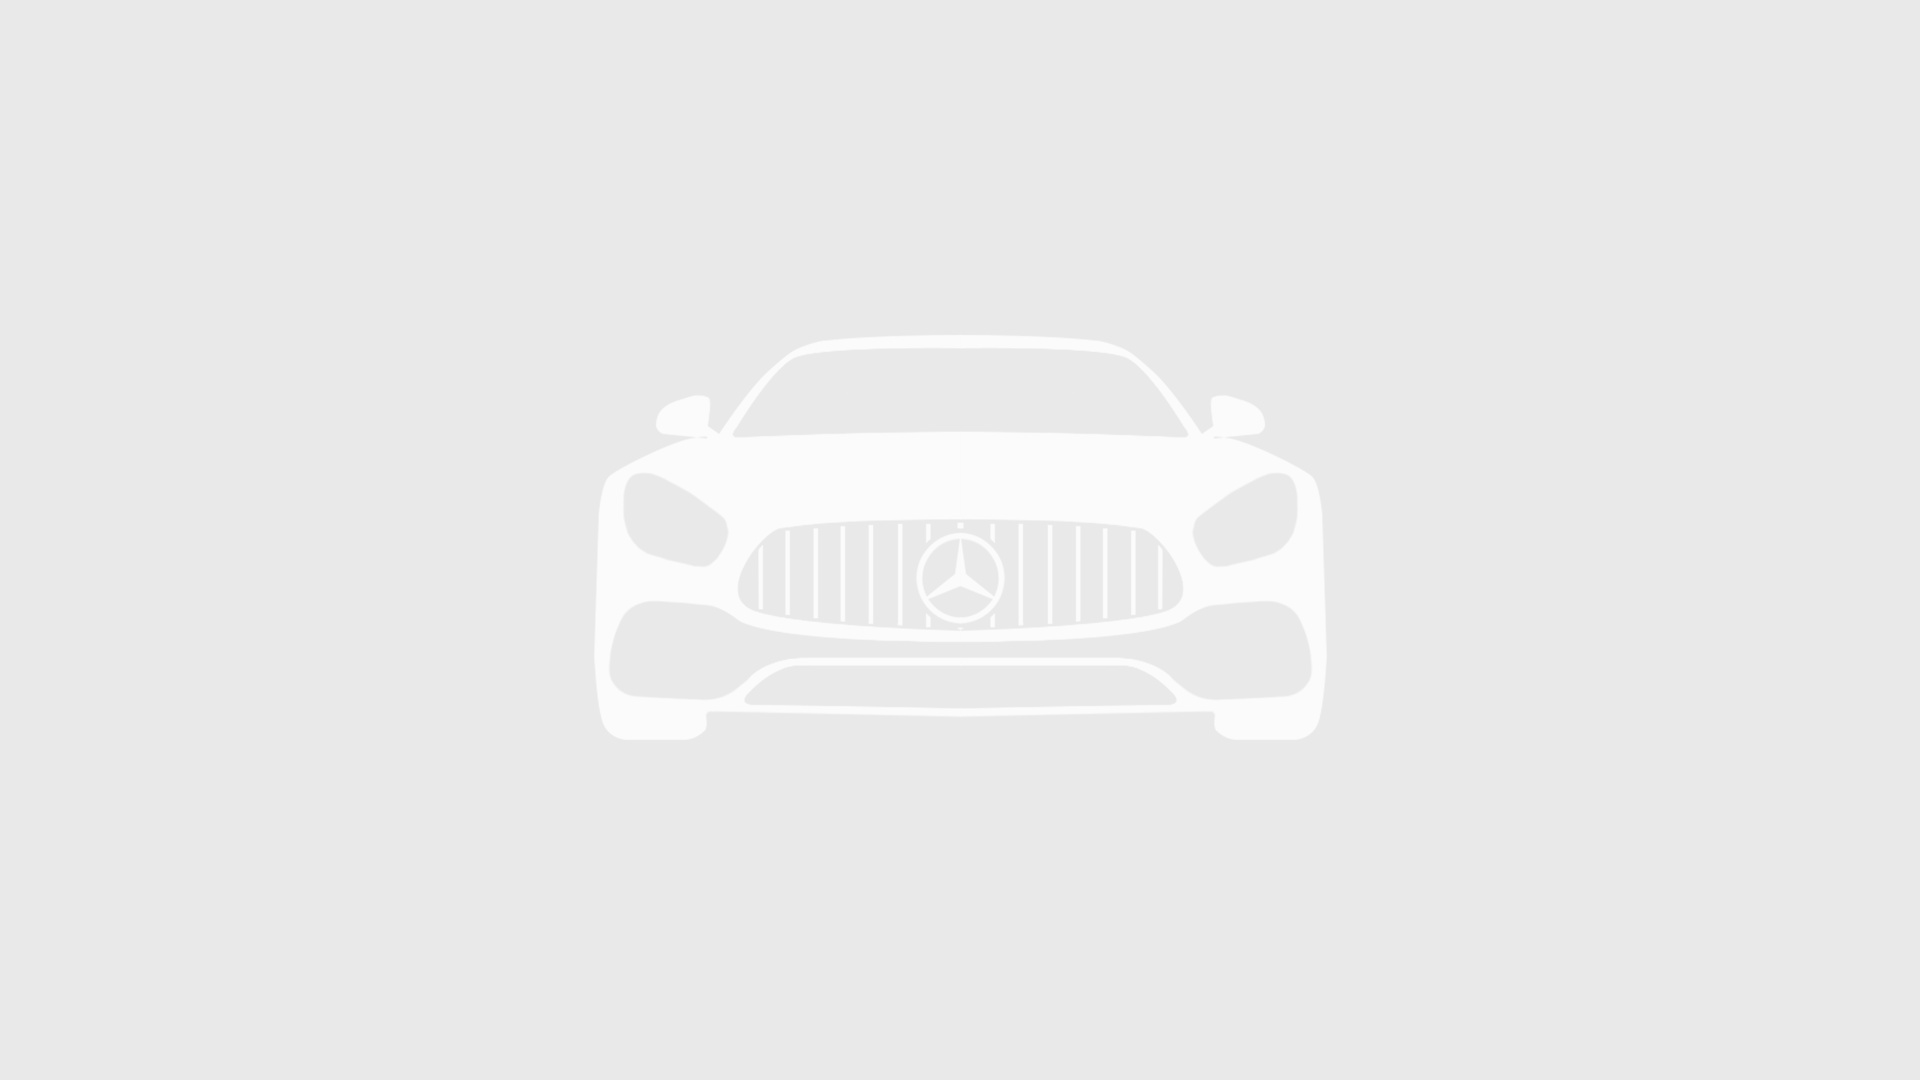 Mercedes-Benz комплектация Avantgarde / L 300 d двигатель 2 литра (237 л.с.) Серый